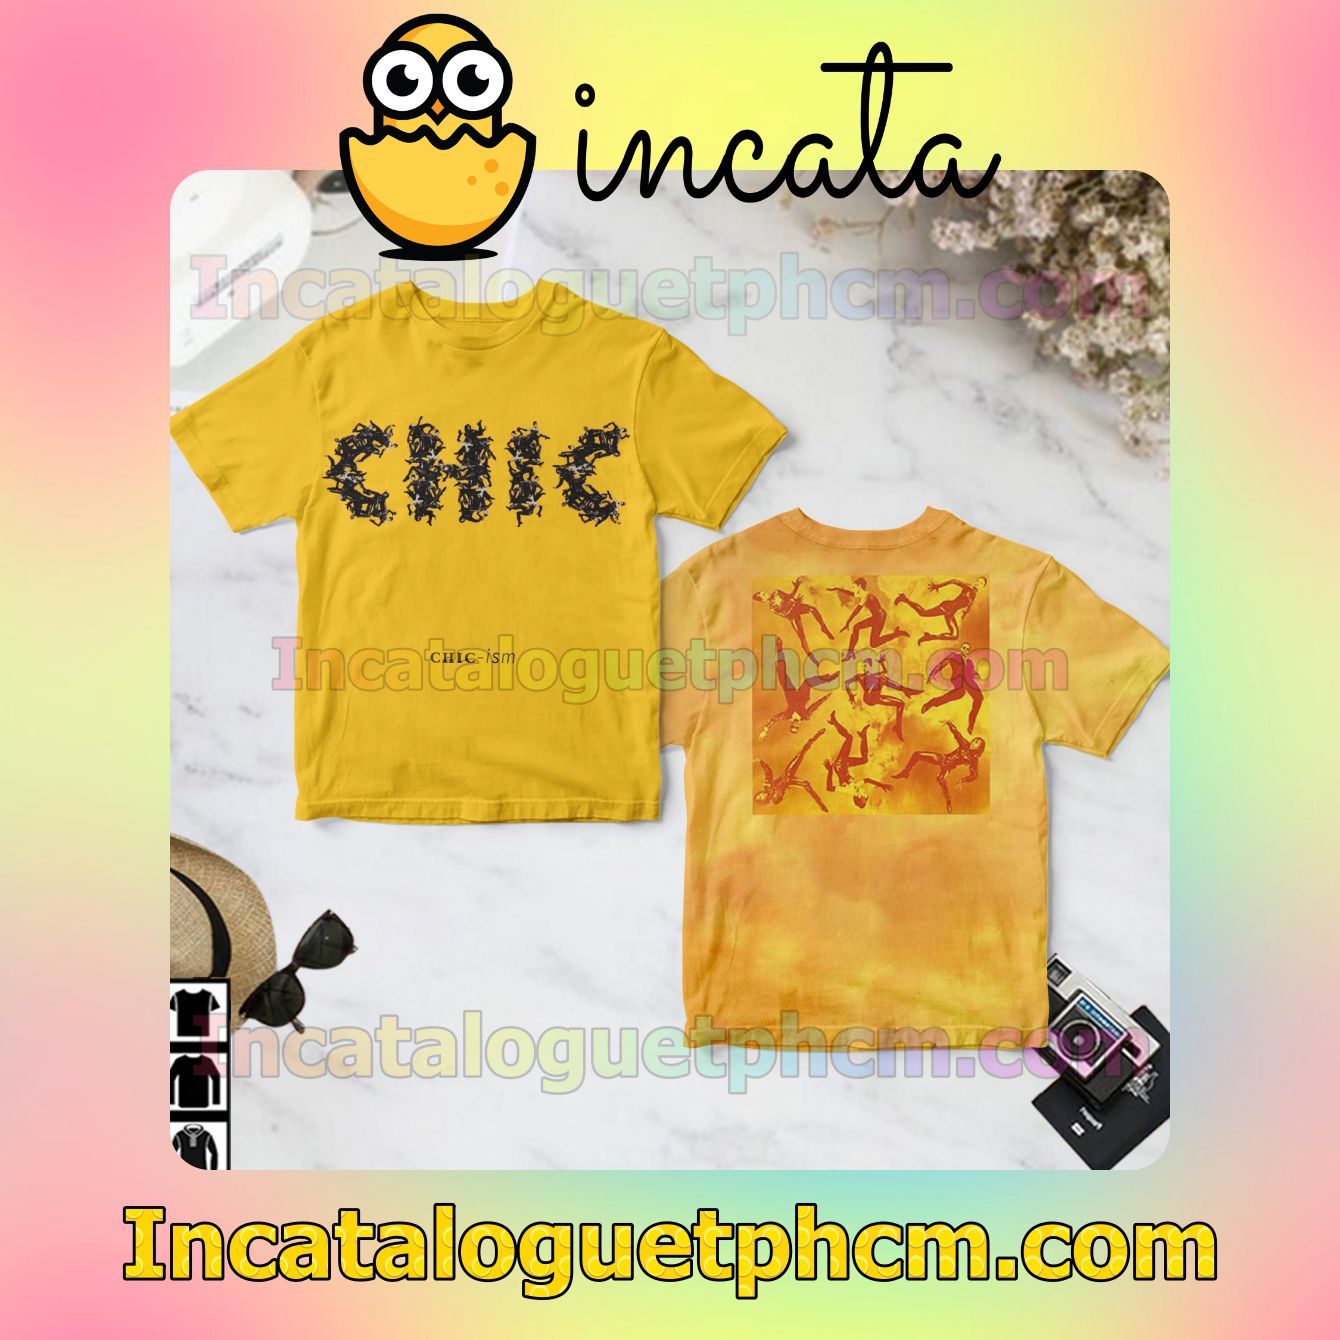 Chic Chic-ism Album Fan Gift Shirt